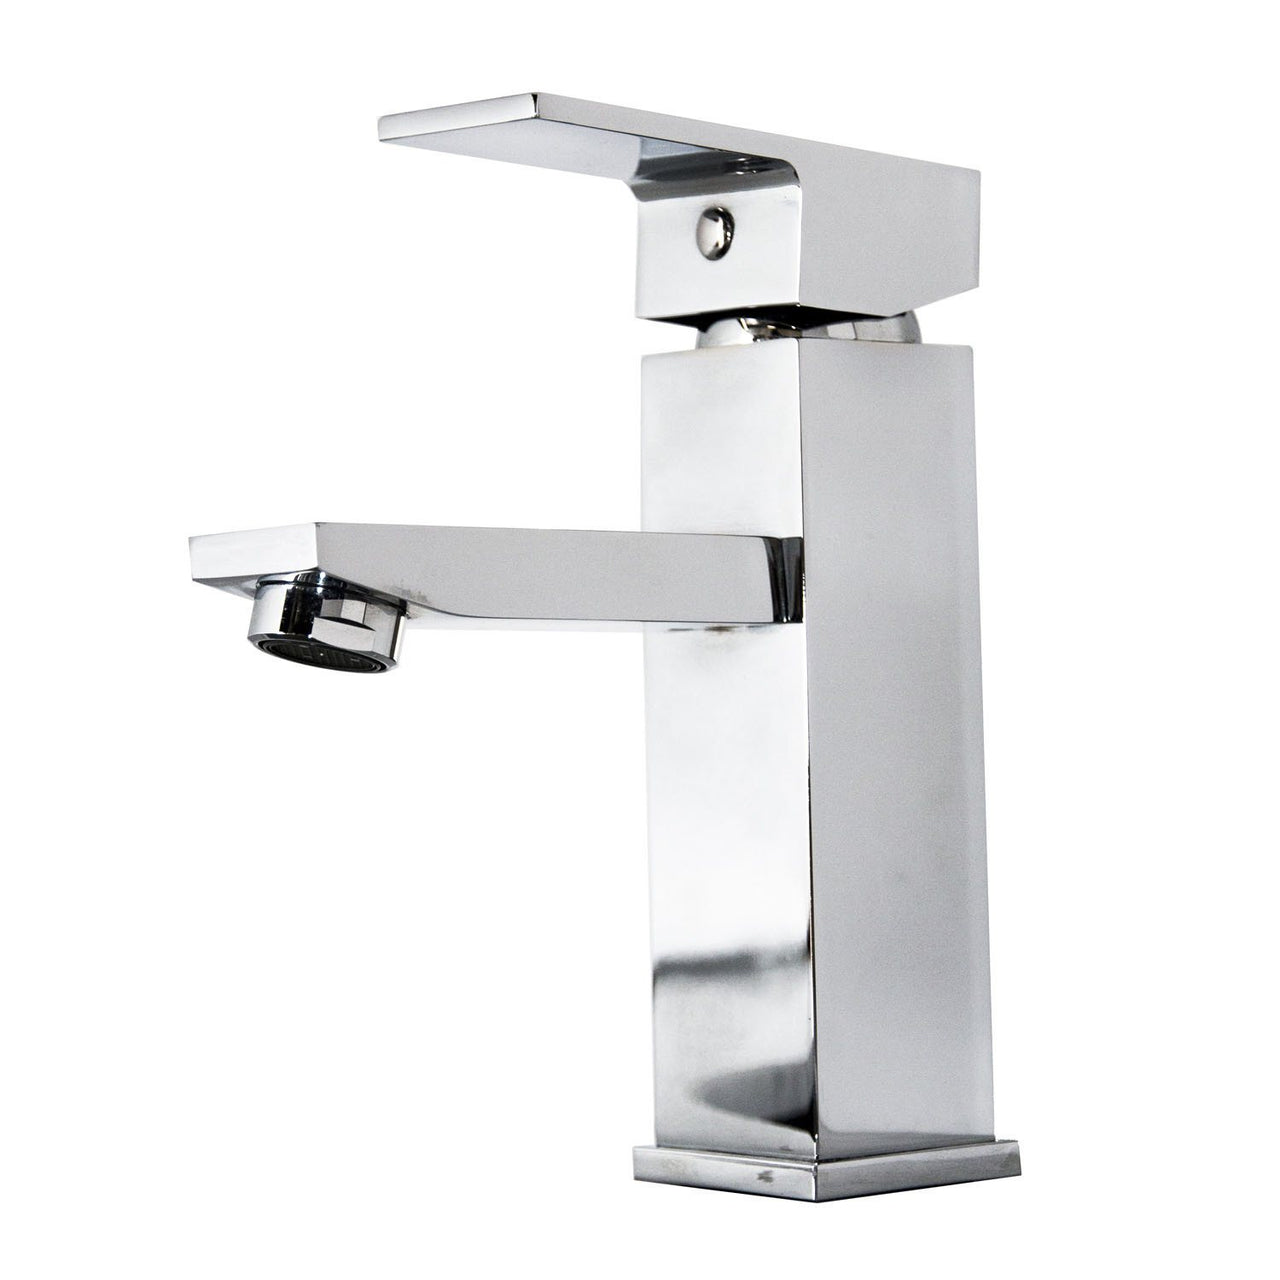 Virtu USA PS-403-PC Orion Polished Chrome Single Handle Faucet Bathroom Faucet Virtu USA 